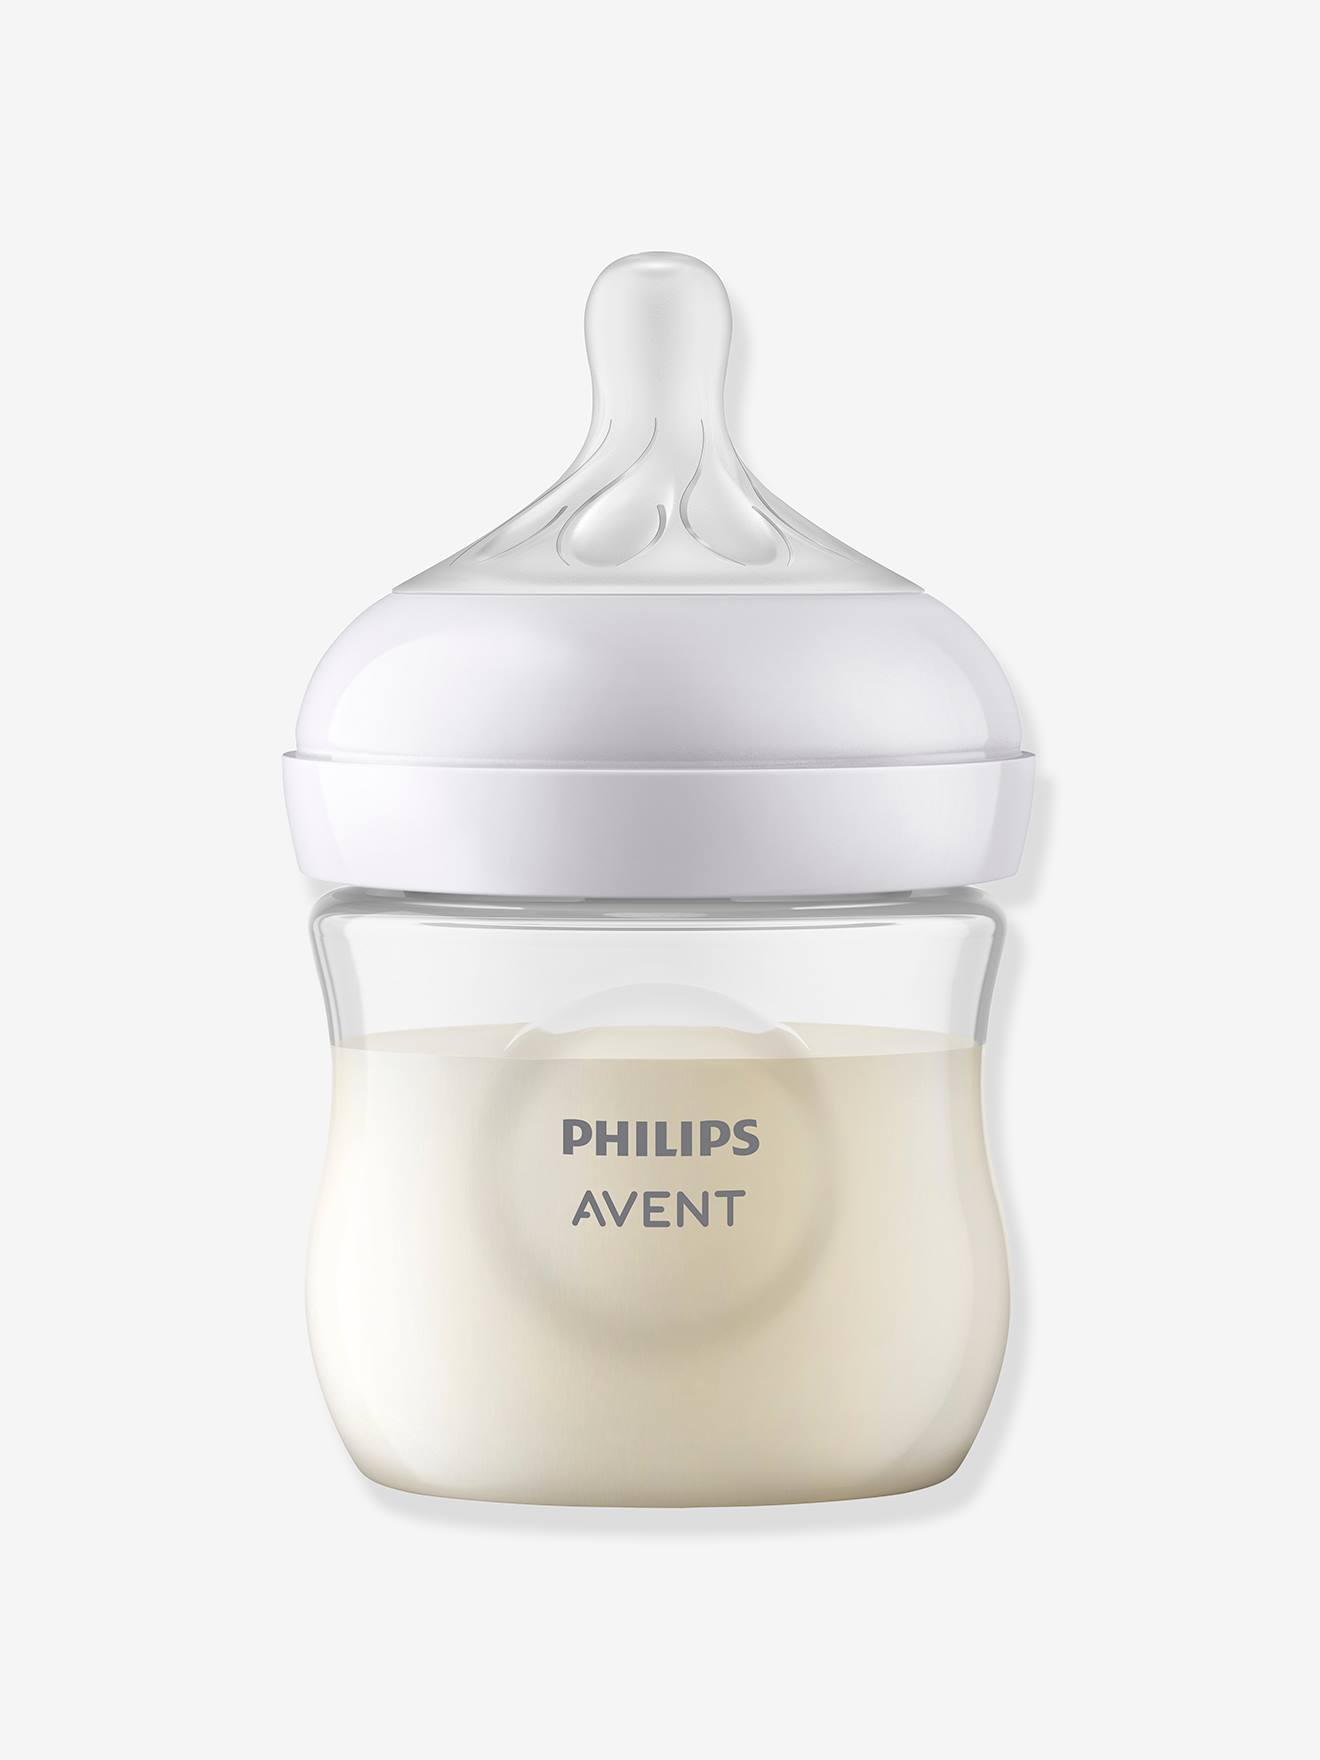 Biberón de 330 ml Natural Response de Philips AVENT transparente - Philips  Avent